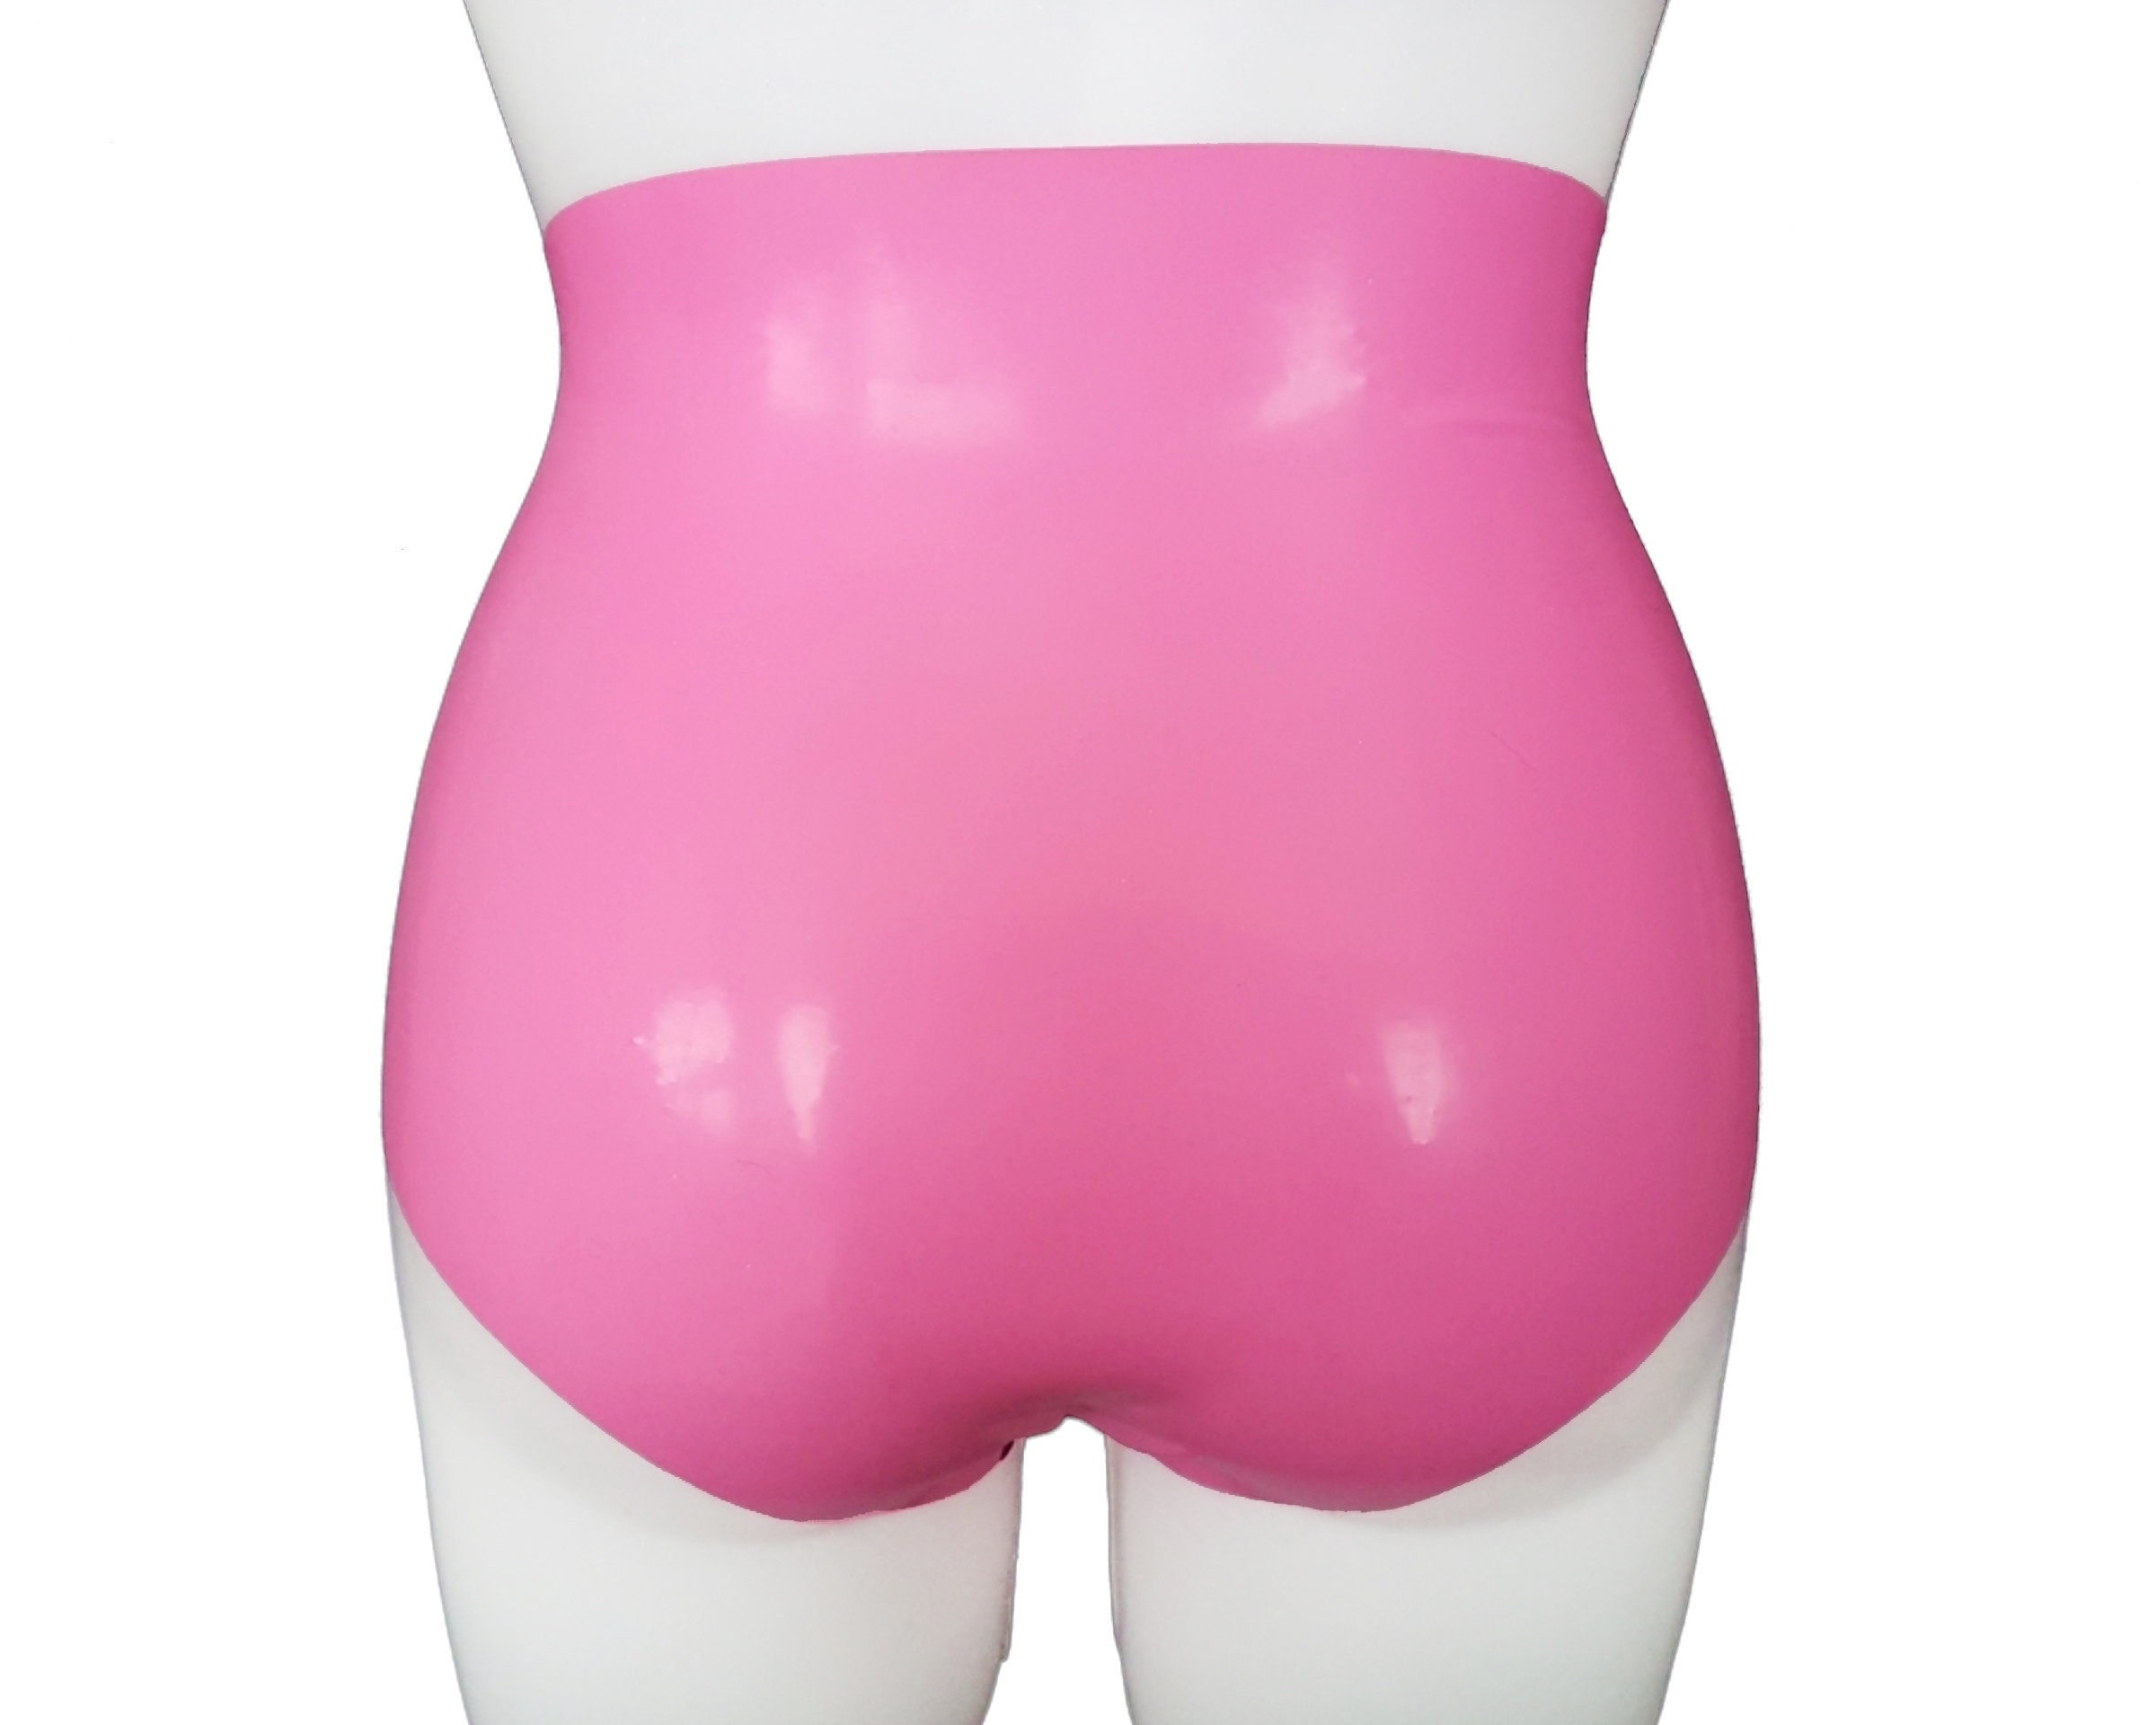 womens underwear, panty, external rubber, white Color White Size 10/5XL